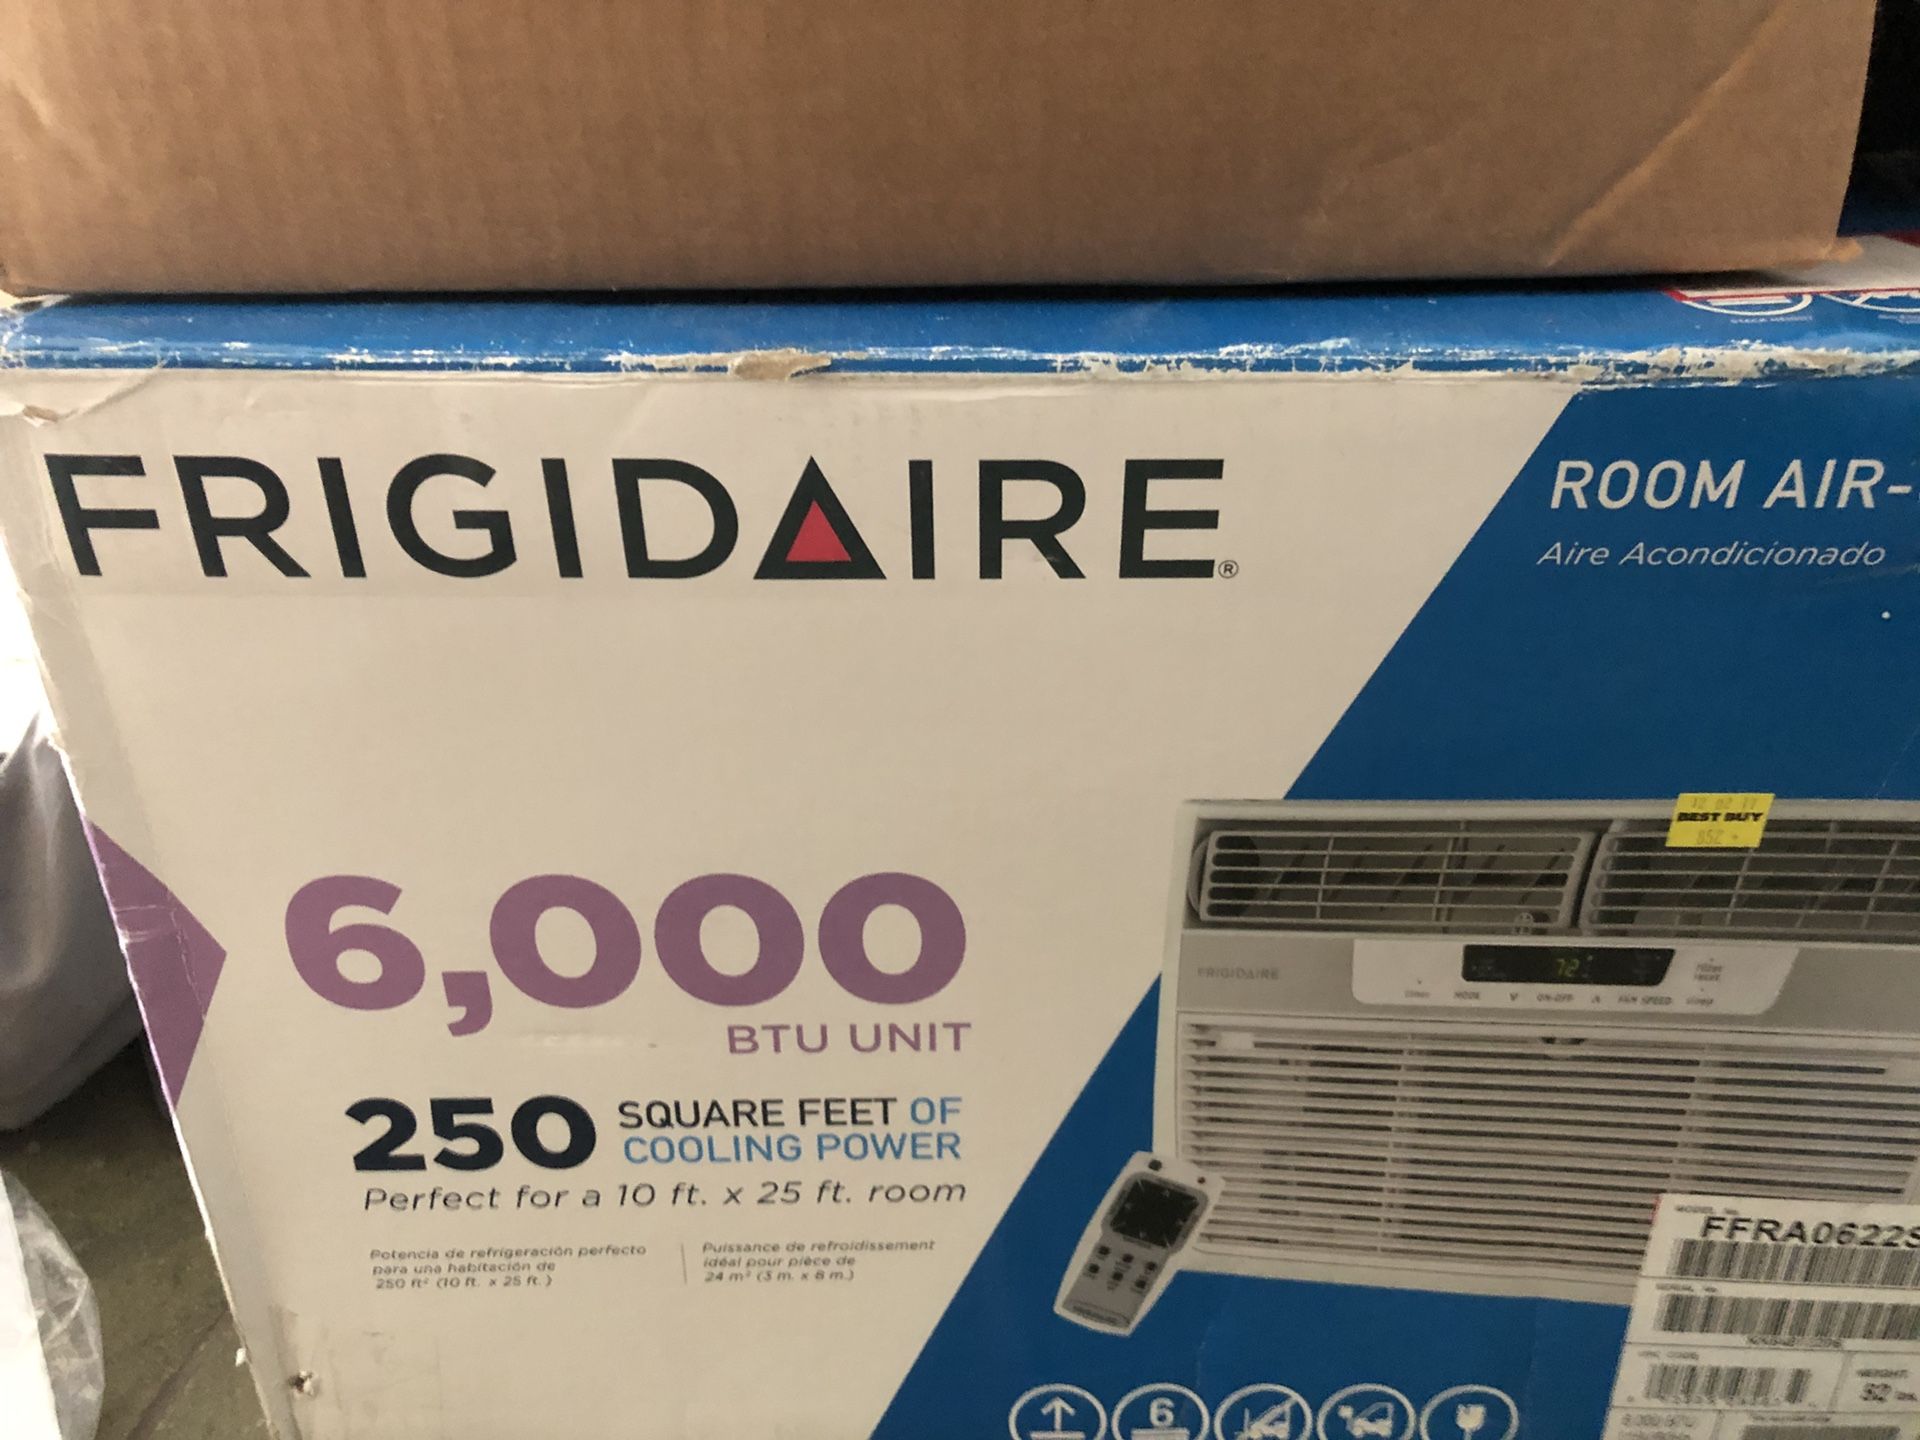 Frigidaire window mounting air conditioner 6,000 BTU